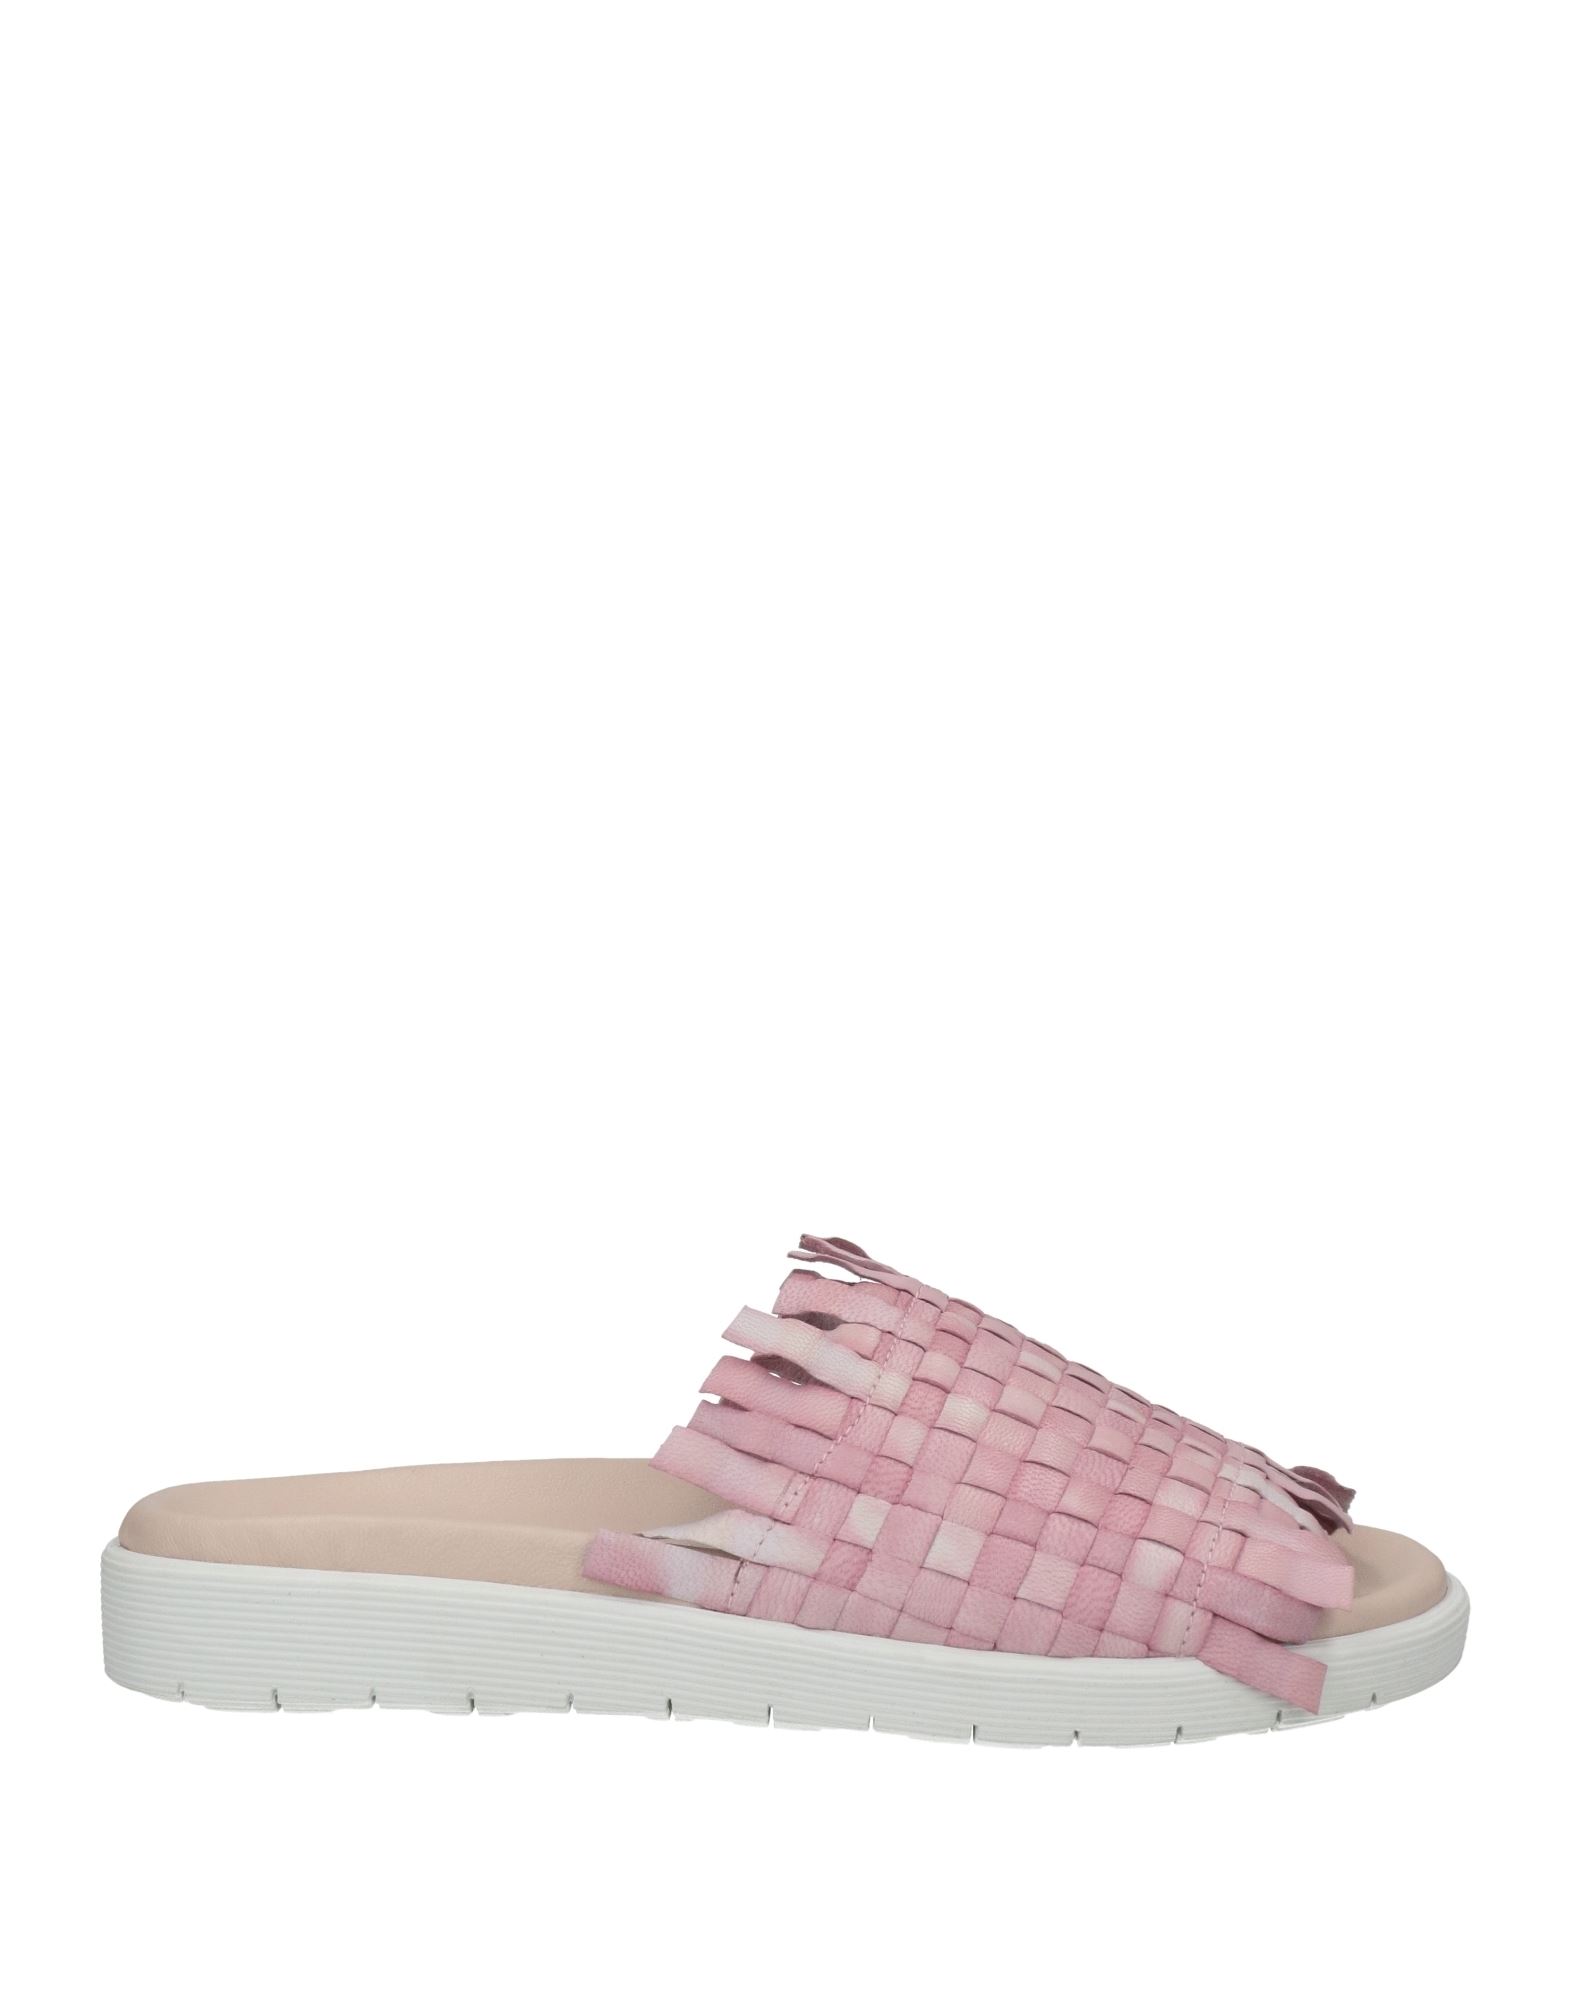 Shop Tosca Blu Woman Sandals Light Pink Size 7 Soft Leather